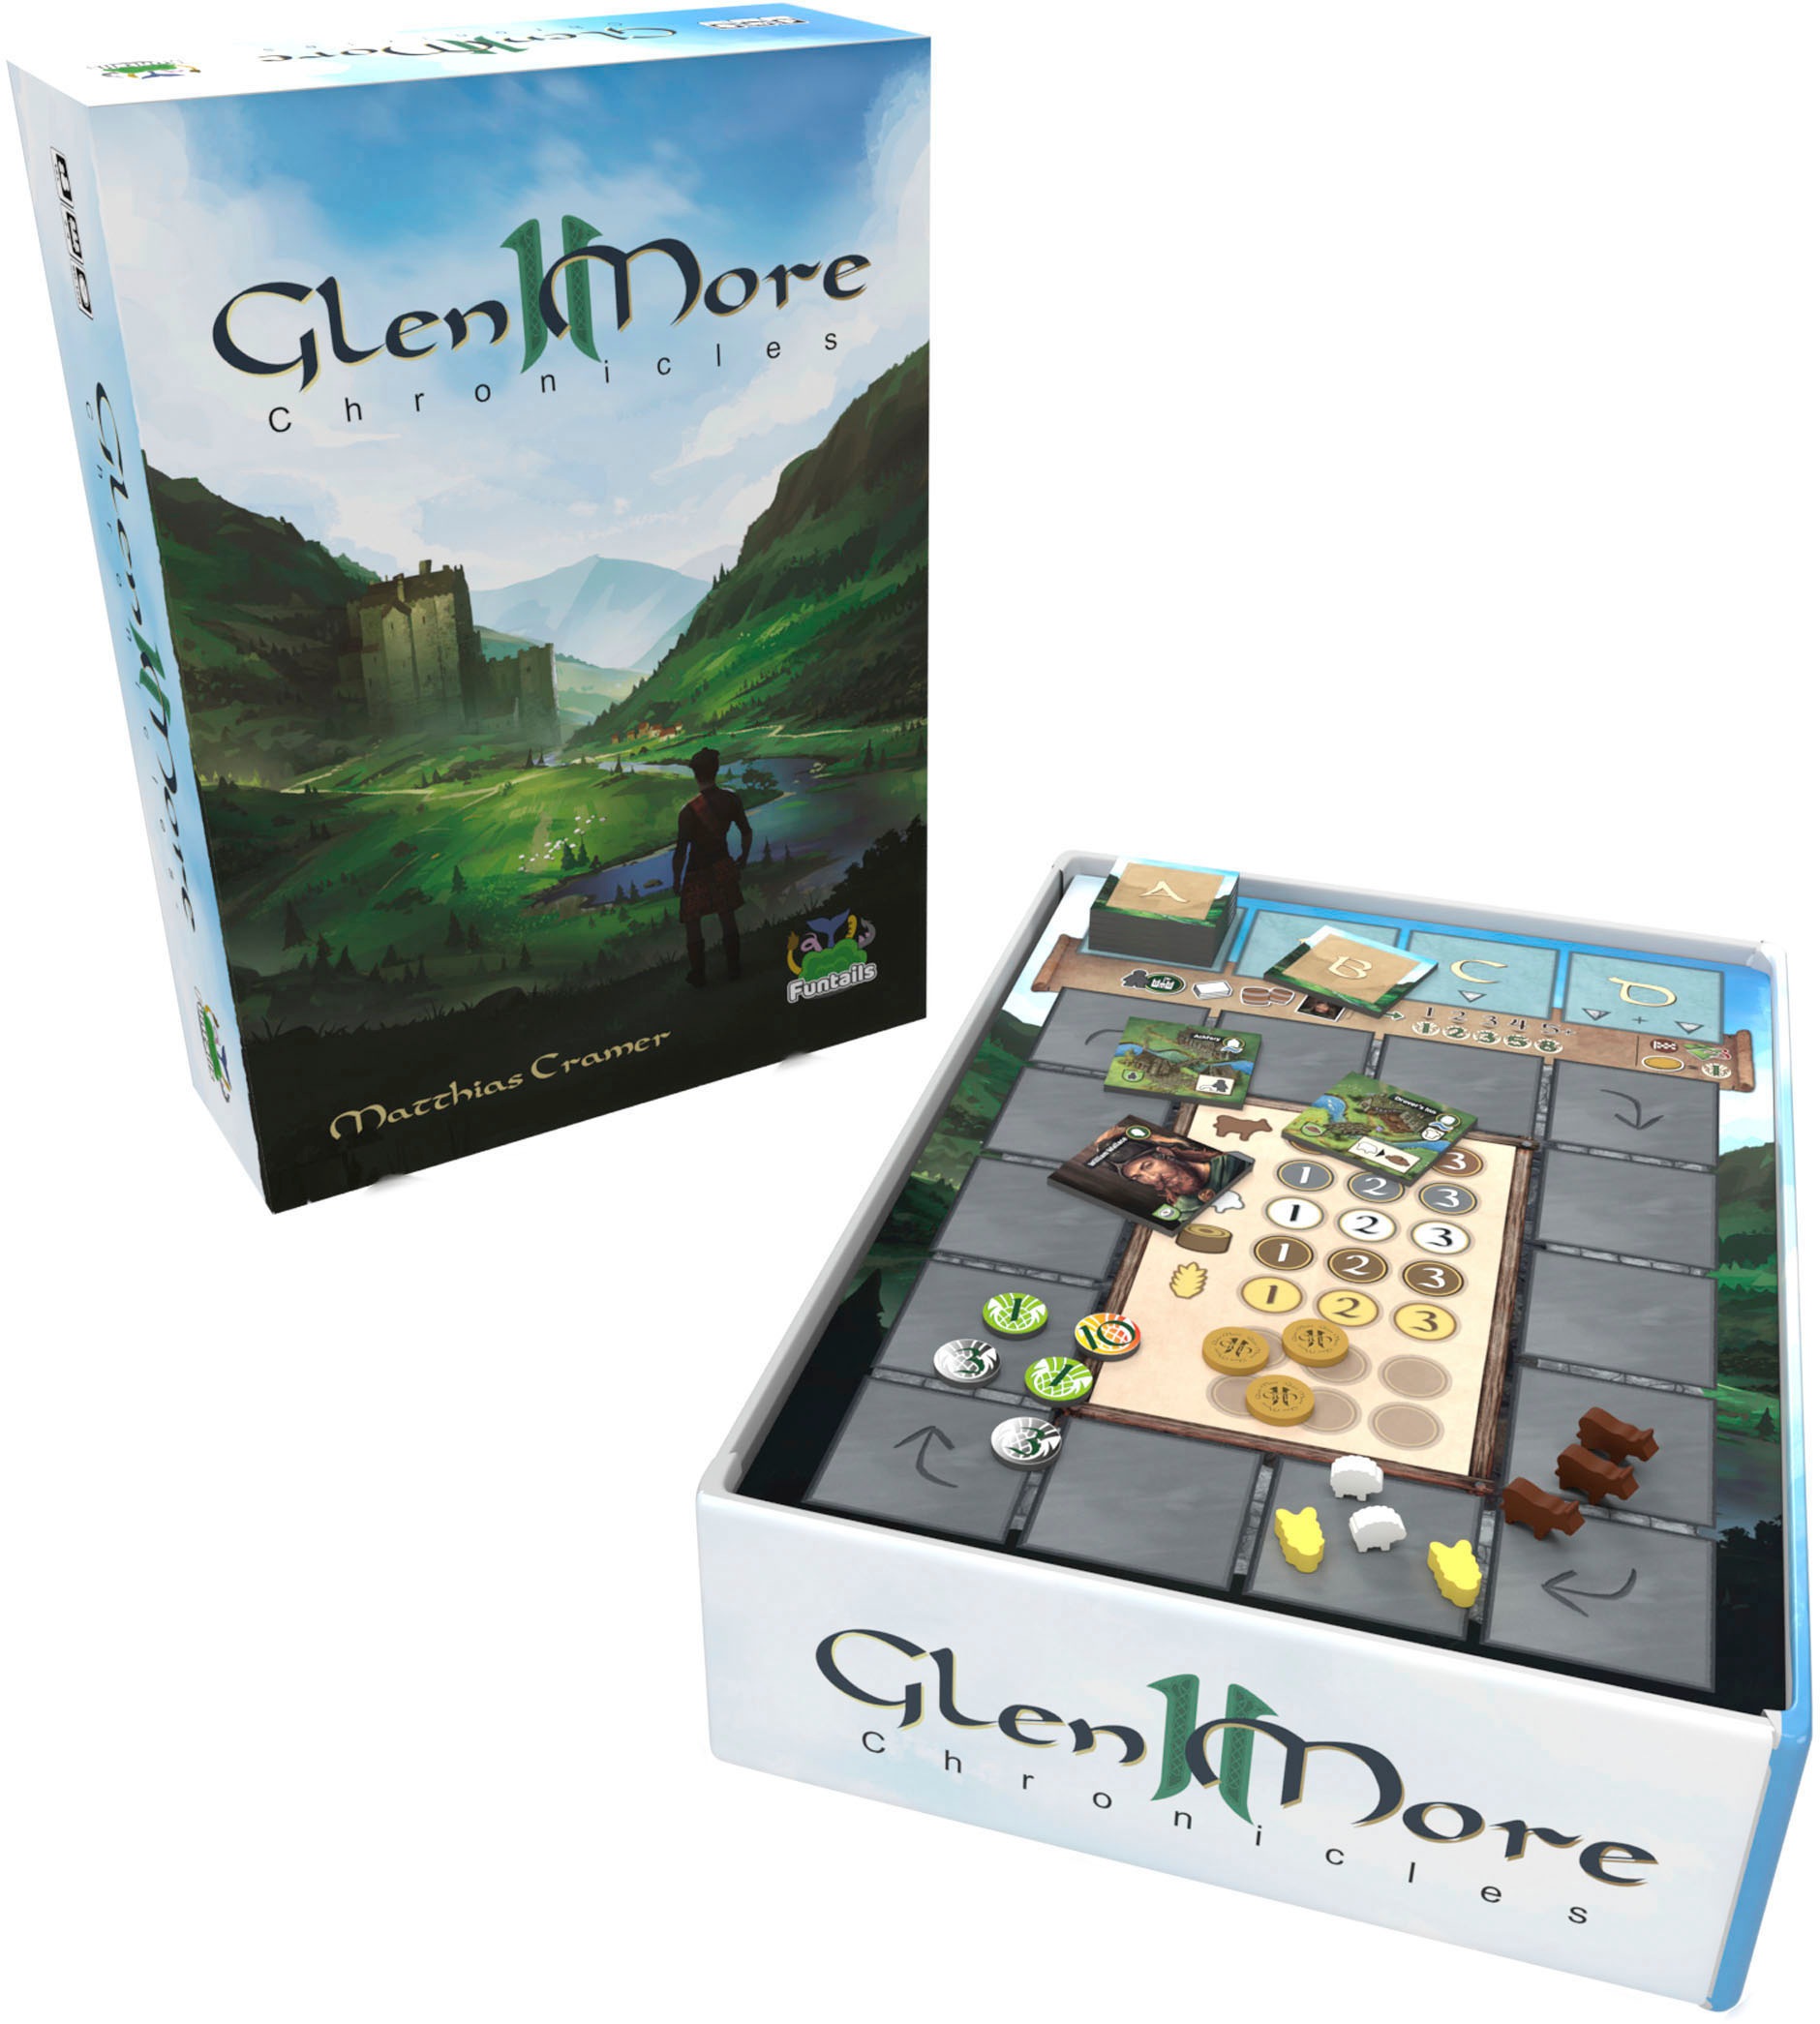 Funtails Spiel »Glen More II: Chronicles«